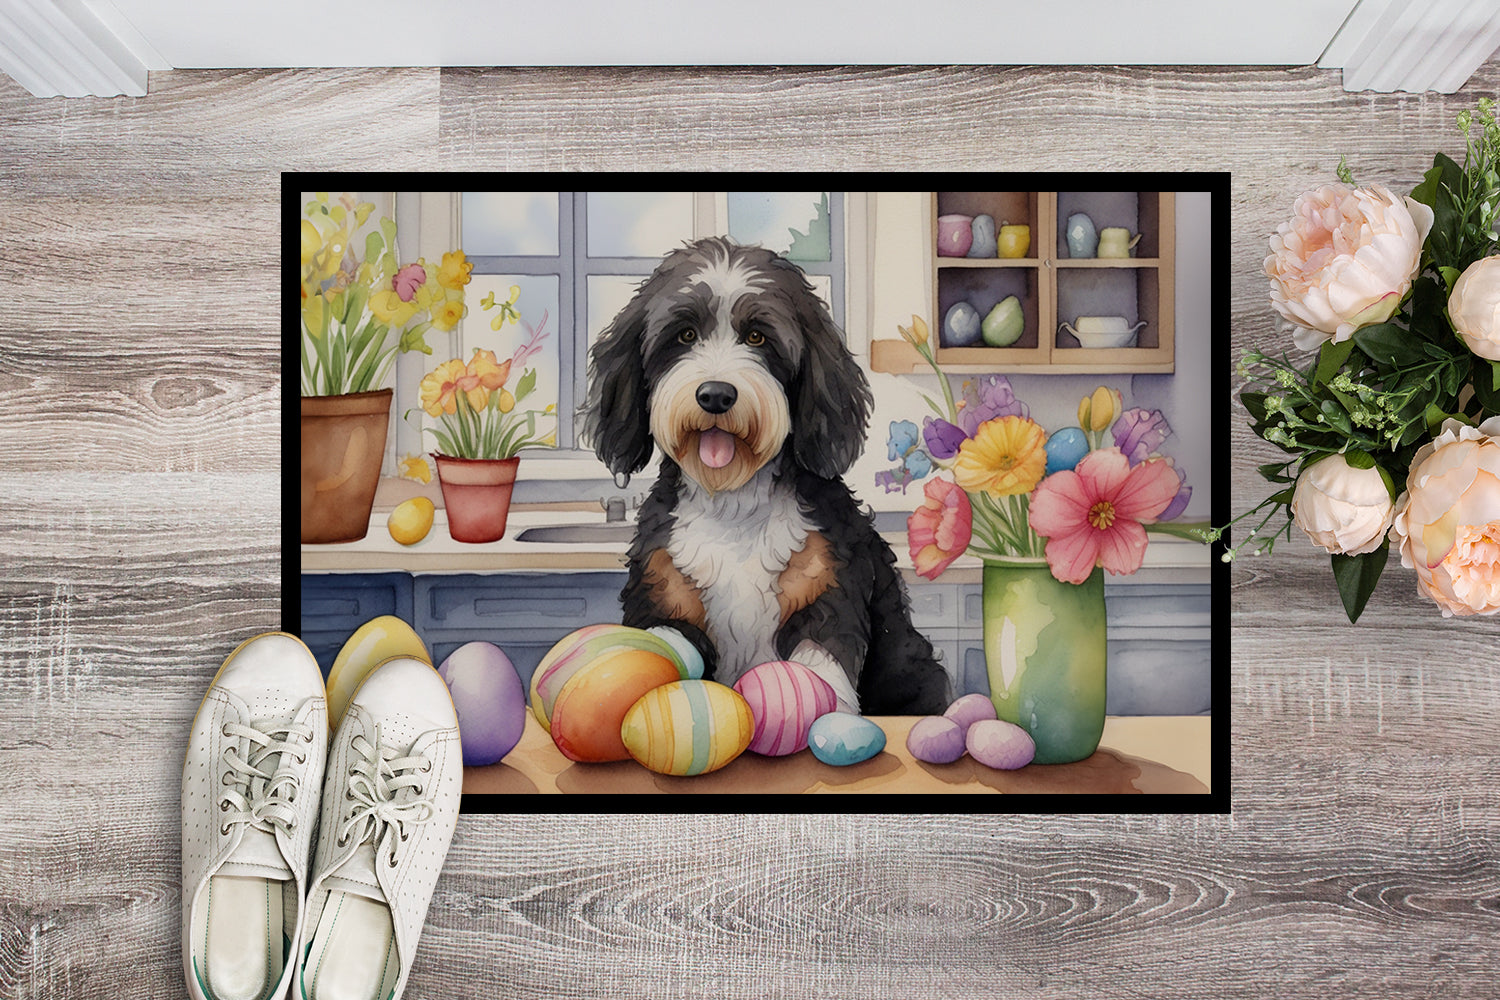 Buy this Decorating Easter Bernedoodle Doormat